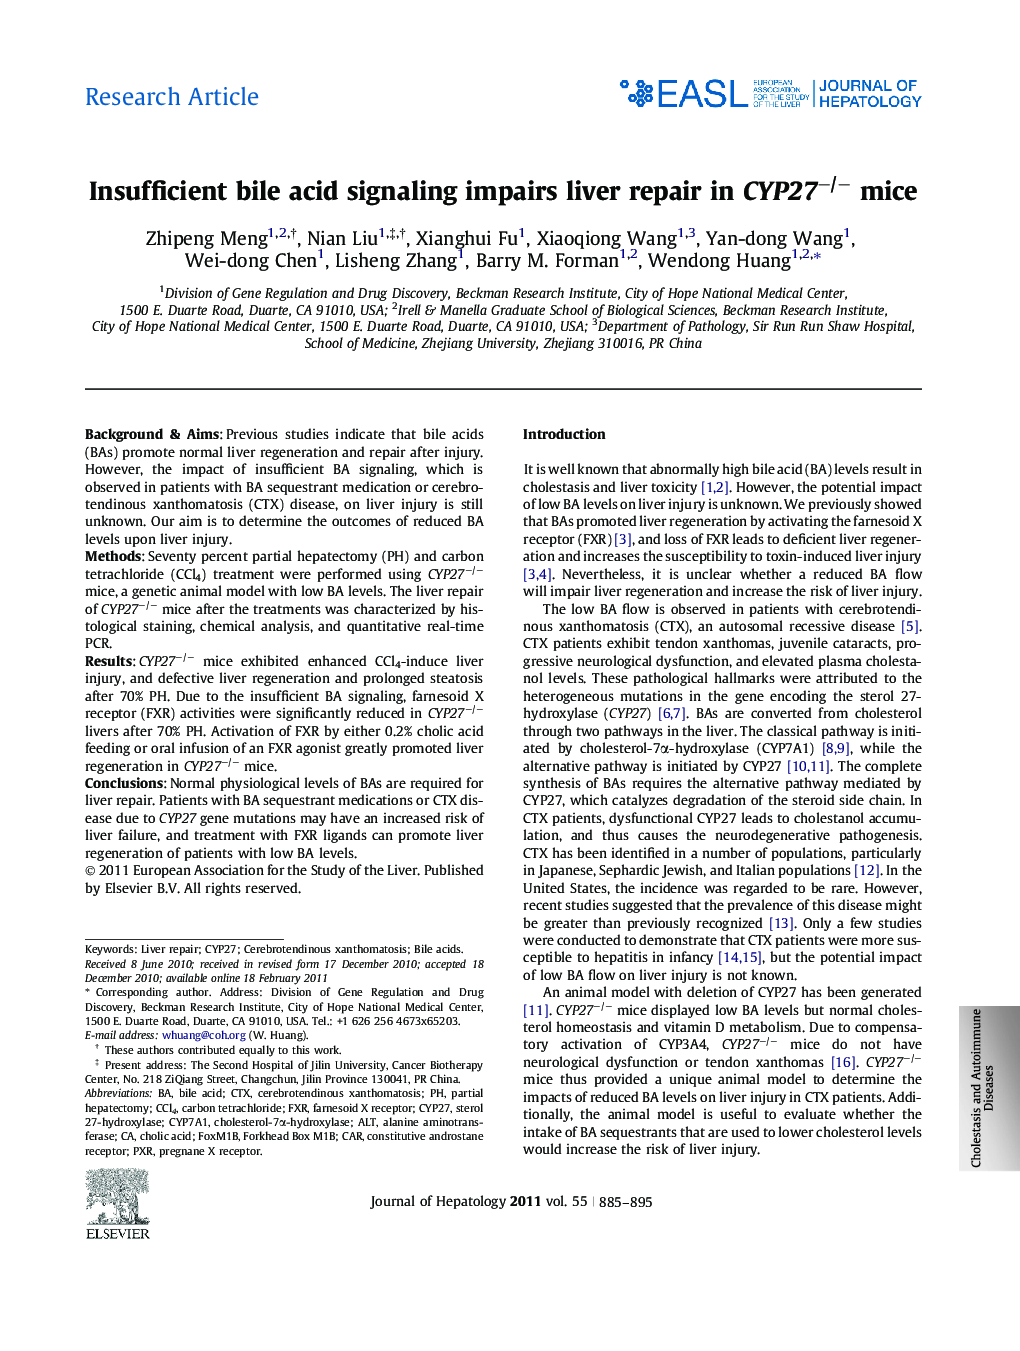 Research ArticleInsufficient bile acid signaling impairs liver repair in CYP27â/â mice